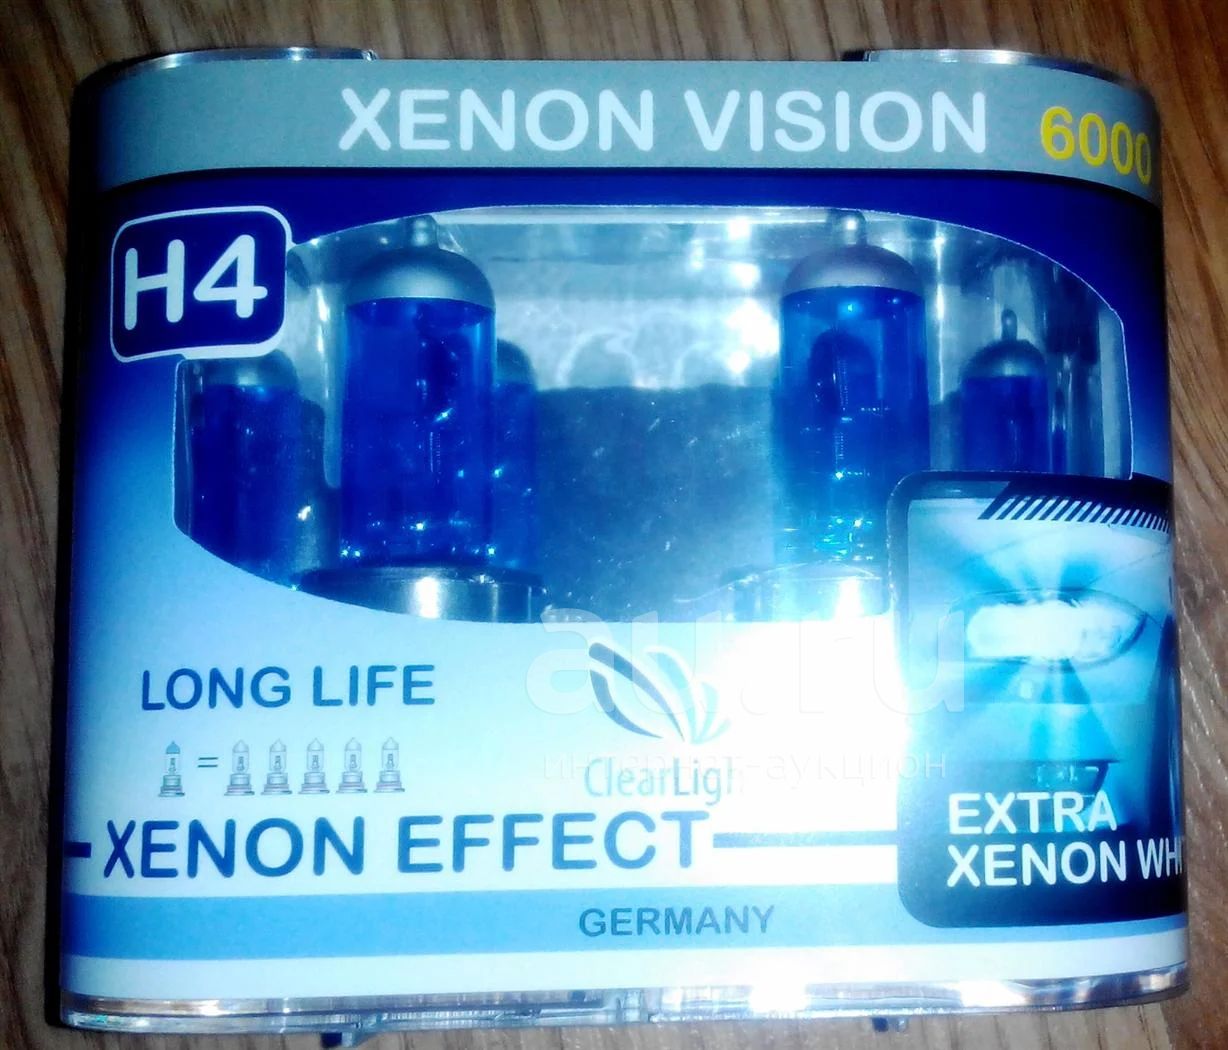 Xenon vision. Xenon Vision 6000k.